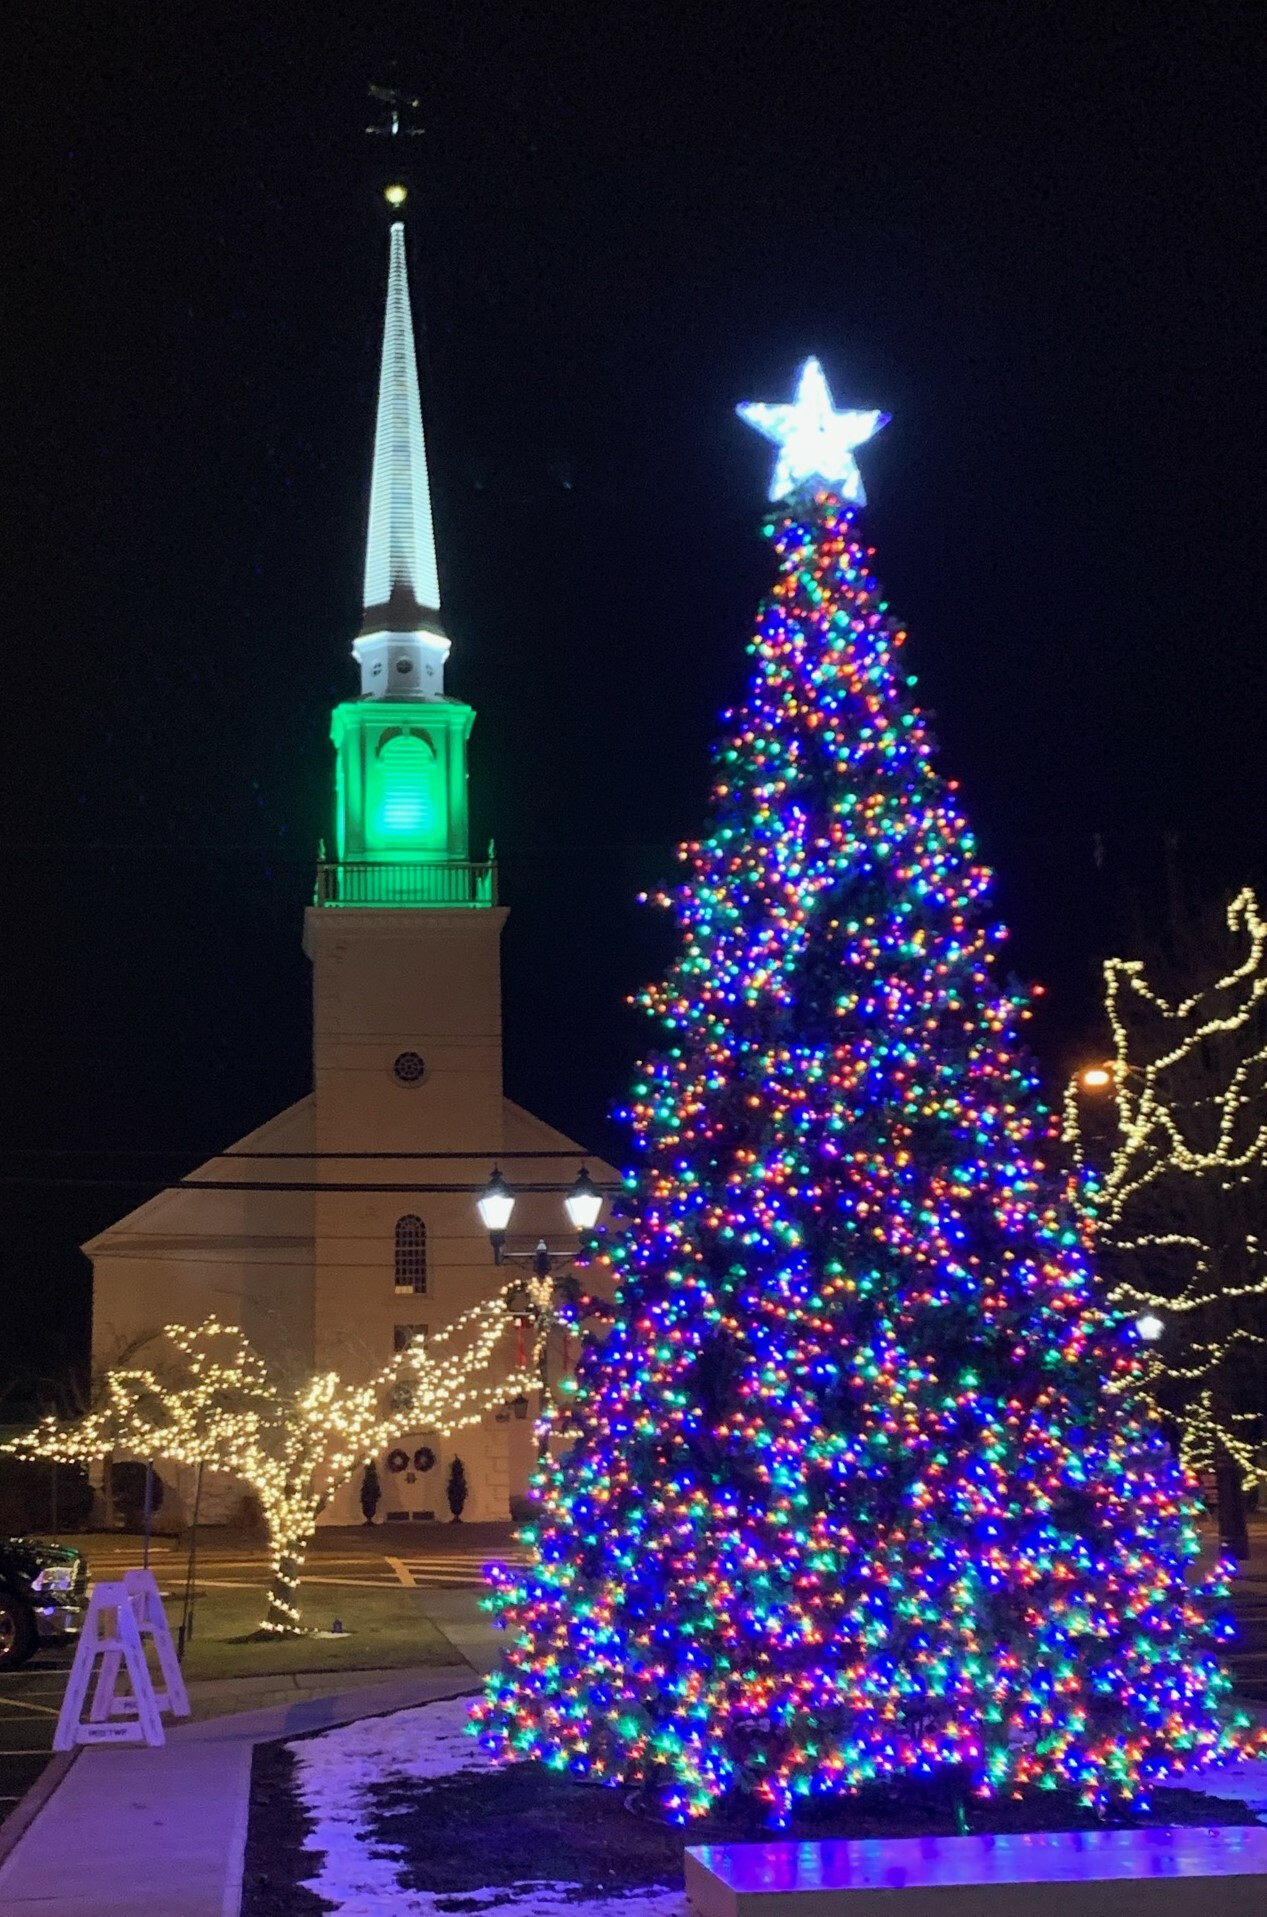 "Hope & Light" Community Christmas Tree Lighting & Program